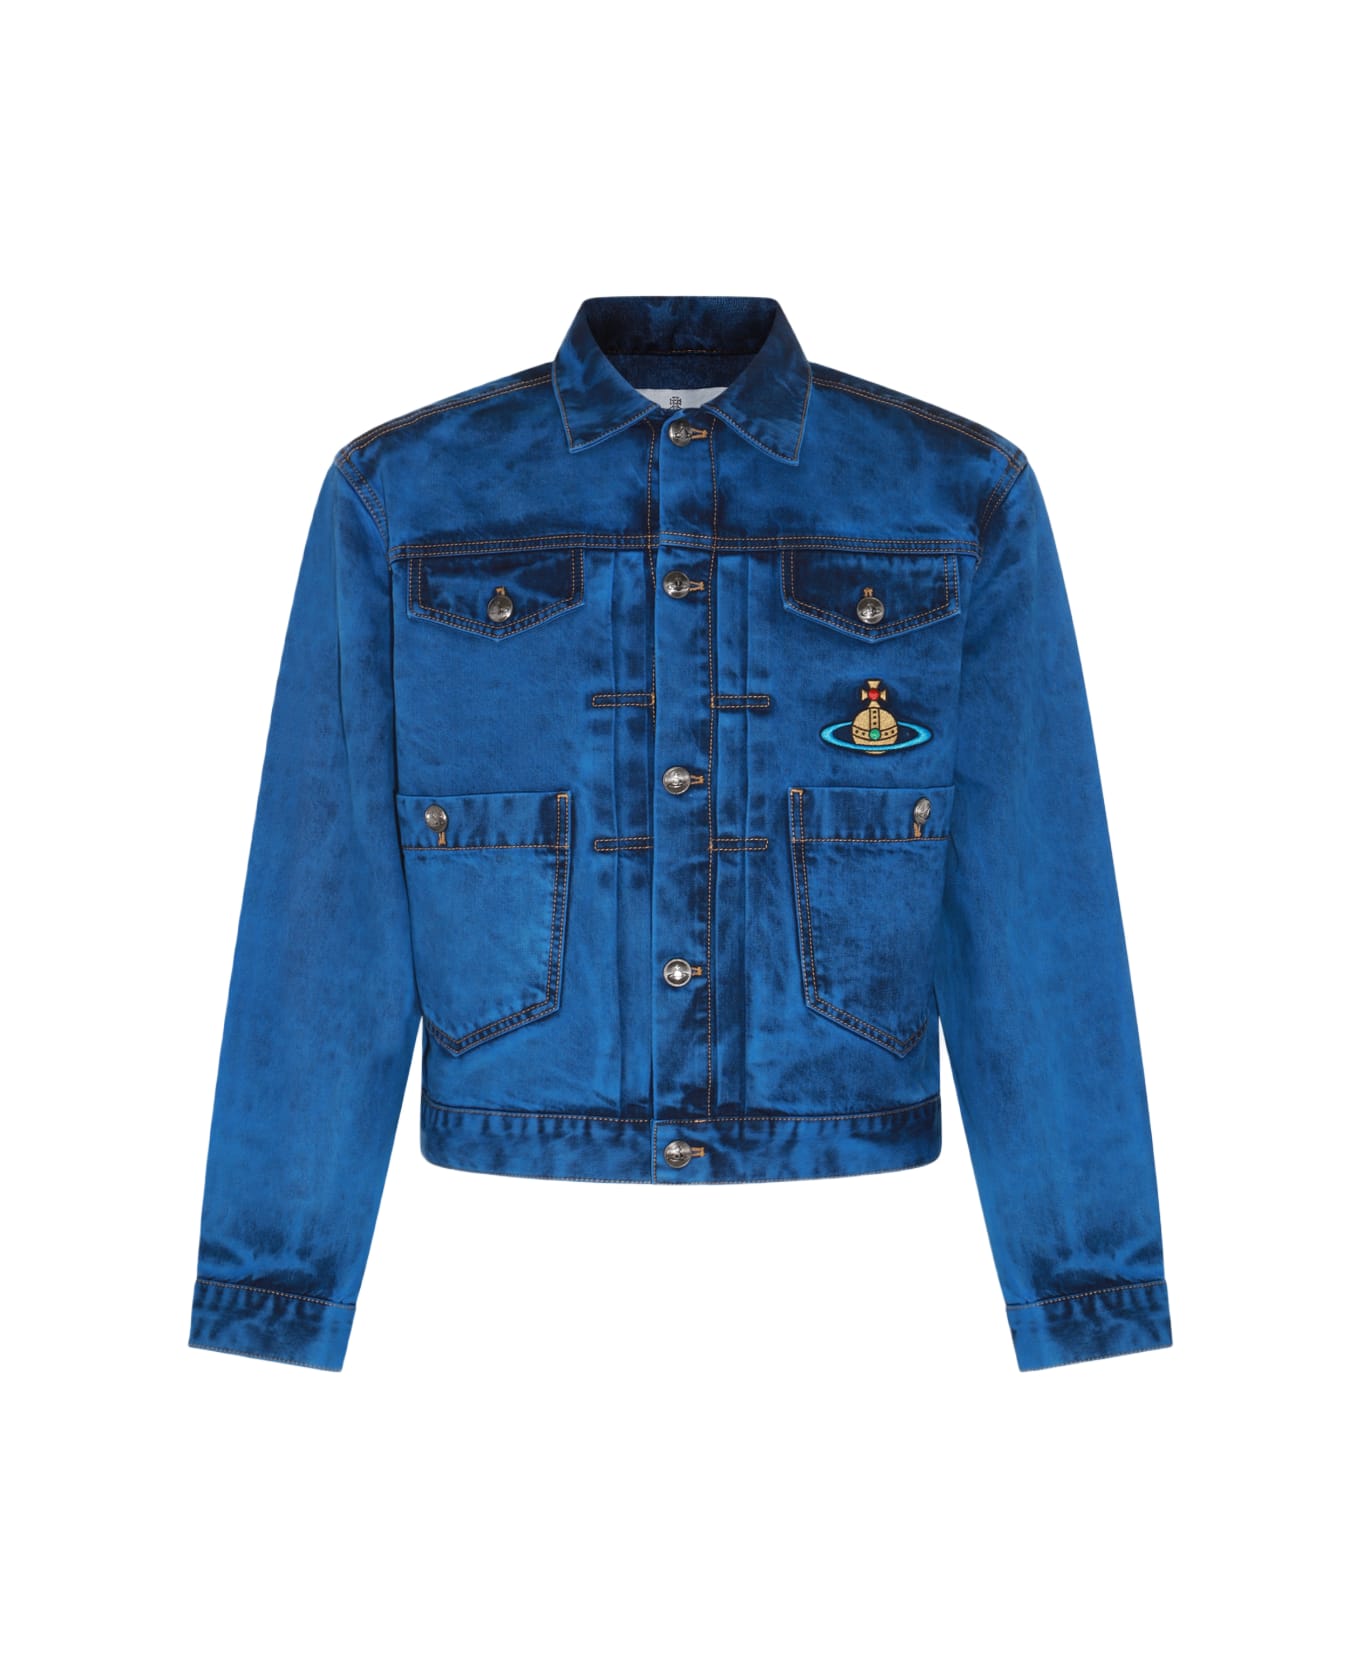 Vivienne Westwood Blue Cotton Blend Denim Jacket - Blue ジャケット